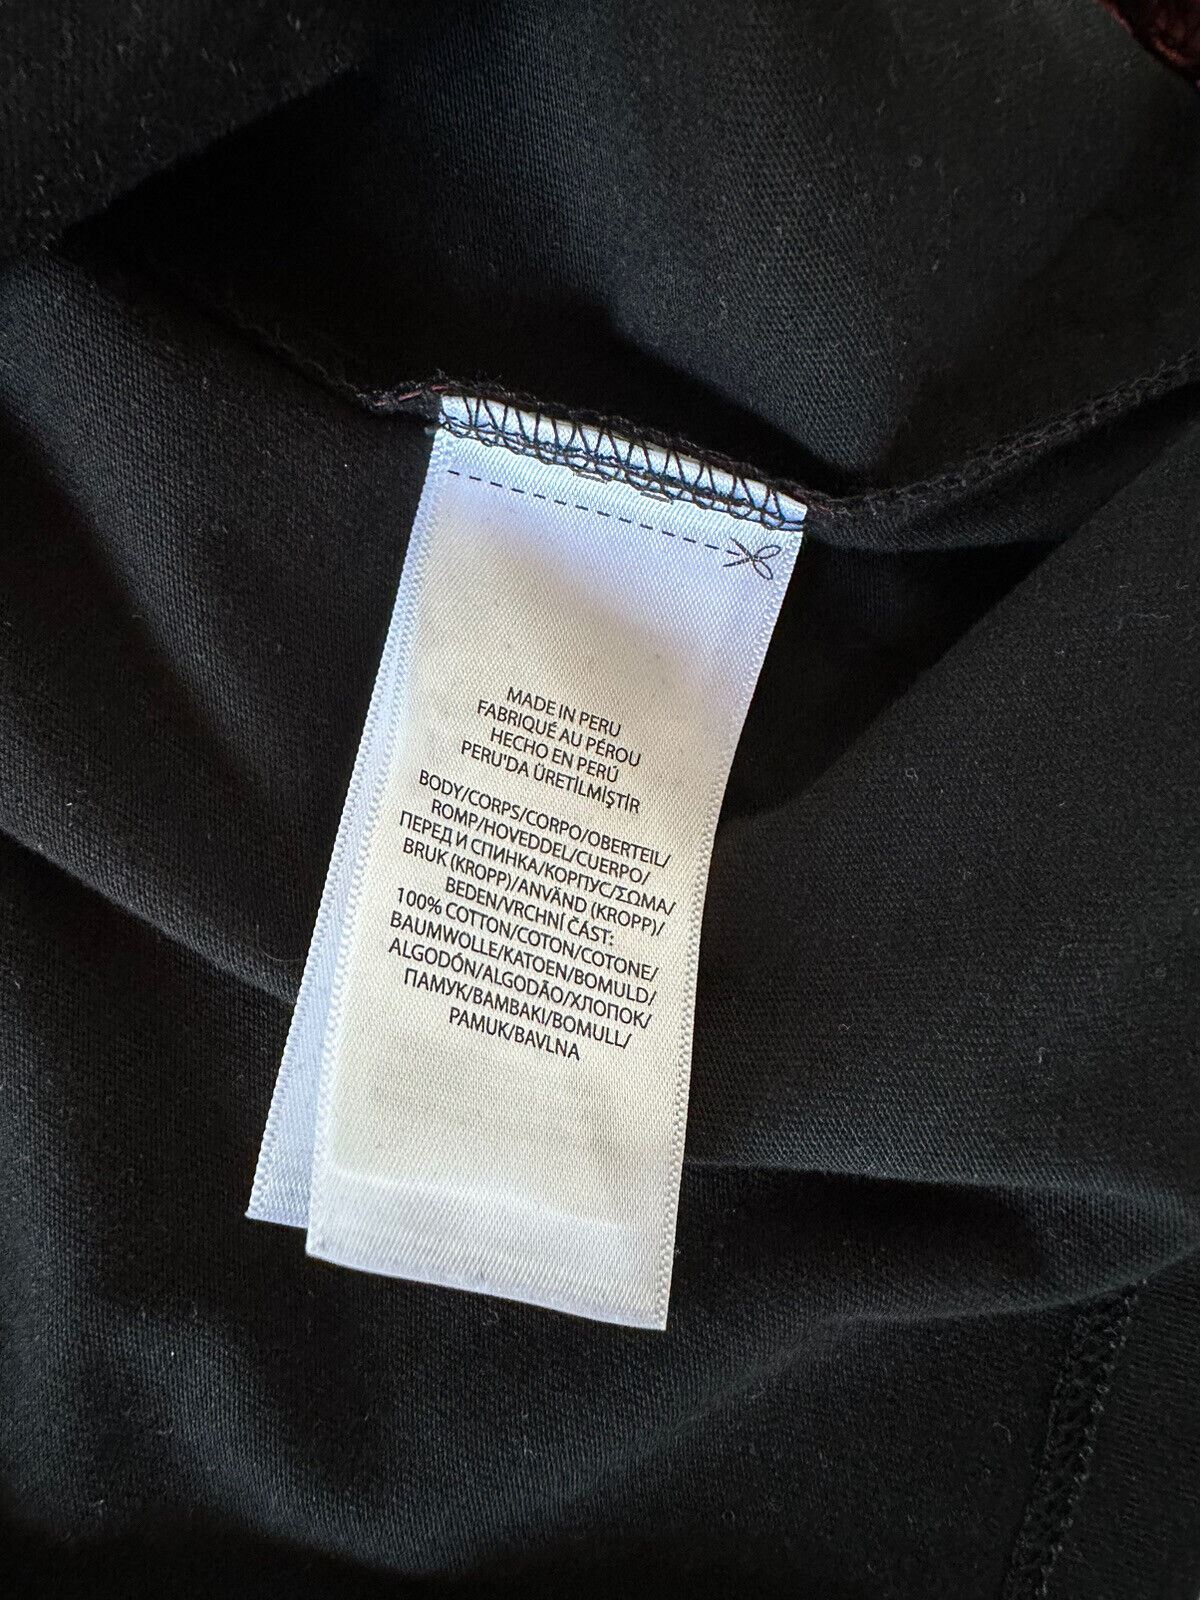 Neu mit Etikett: 65 $ Polo Ralph Lauren Kurzarm-Logo-T-Shirt Schwarz 2XL 